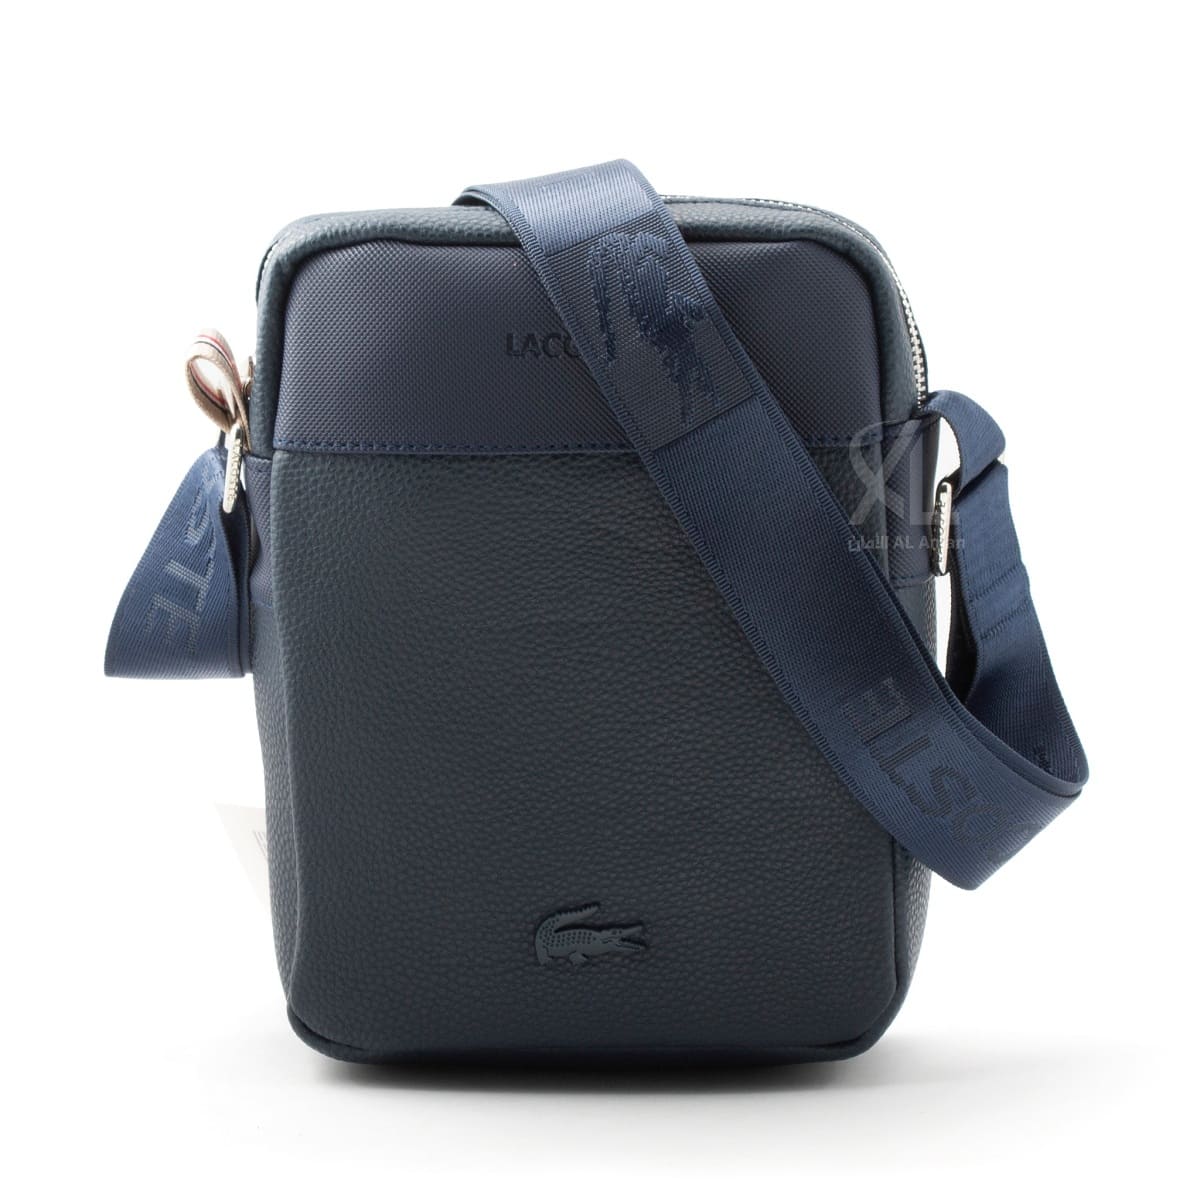 Lacoste-crossbag-with-hand-blue-color-leather-men's-bag-messenger-egypt